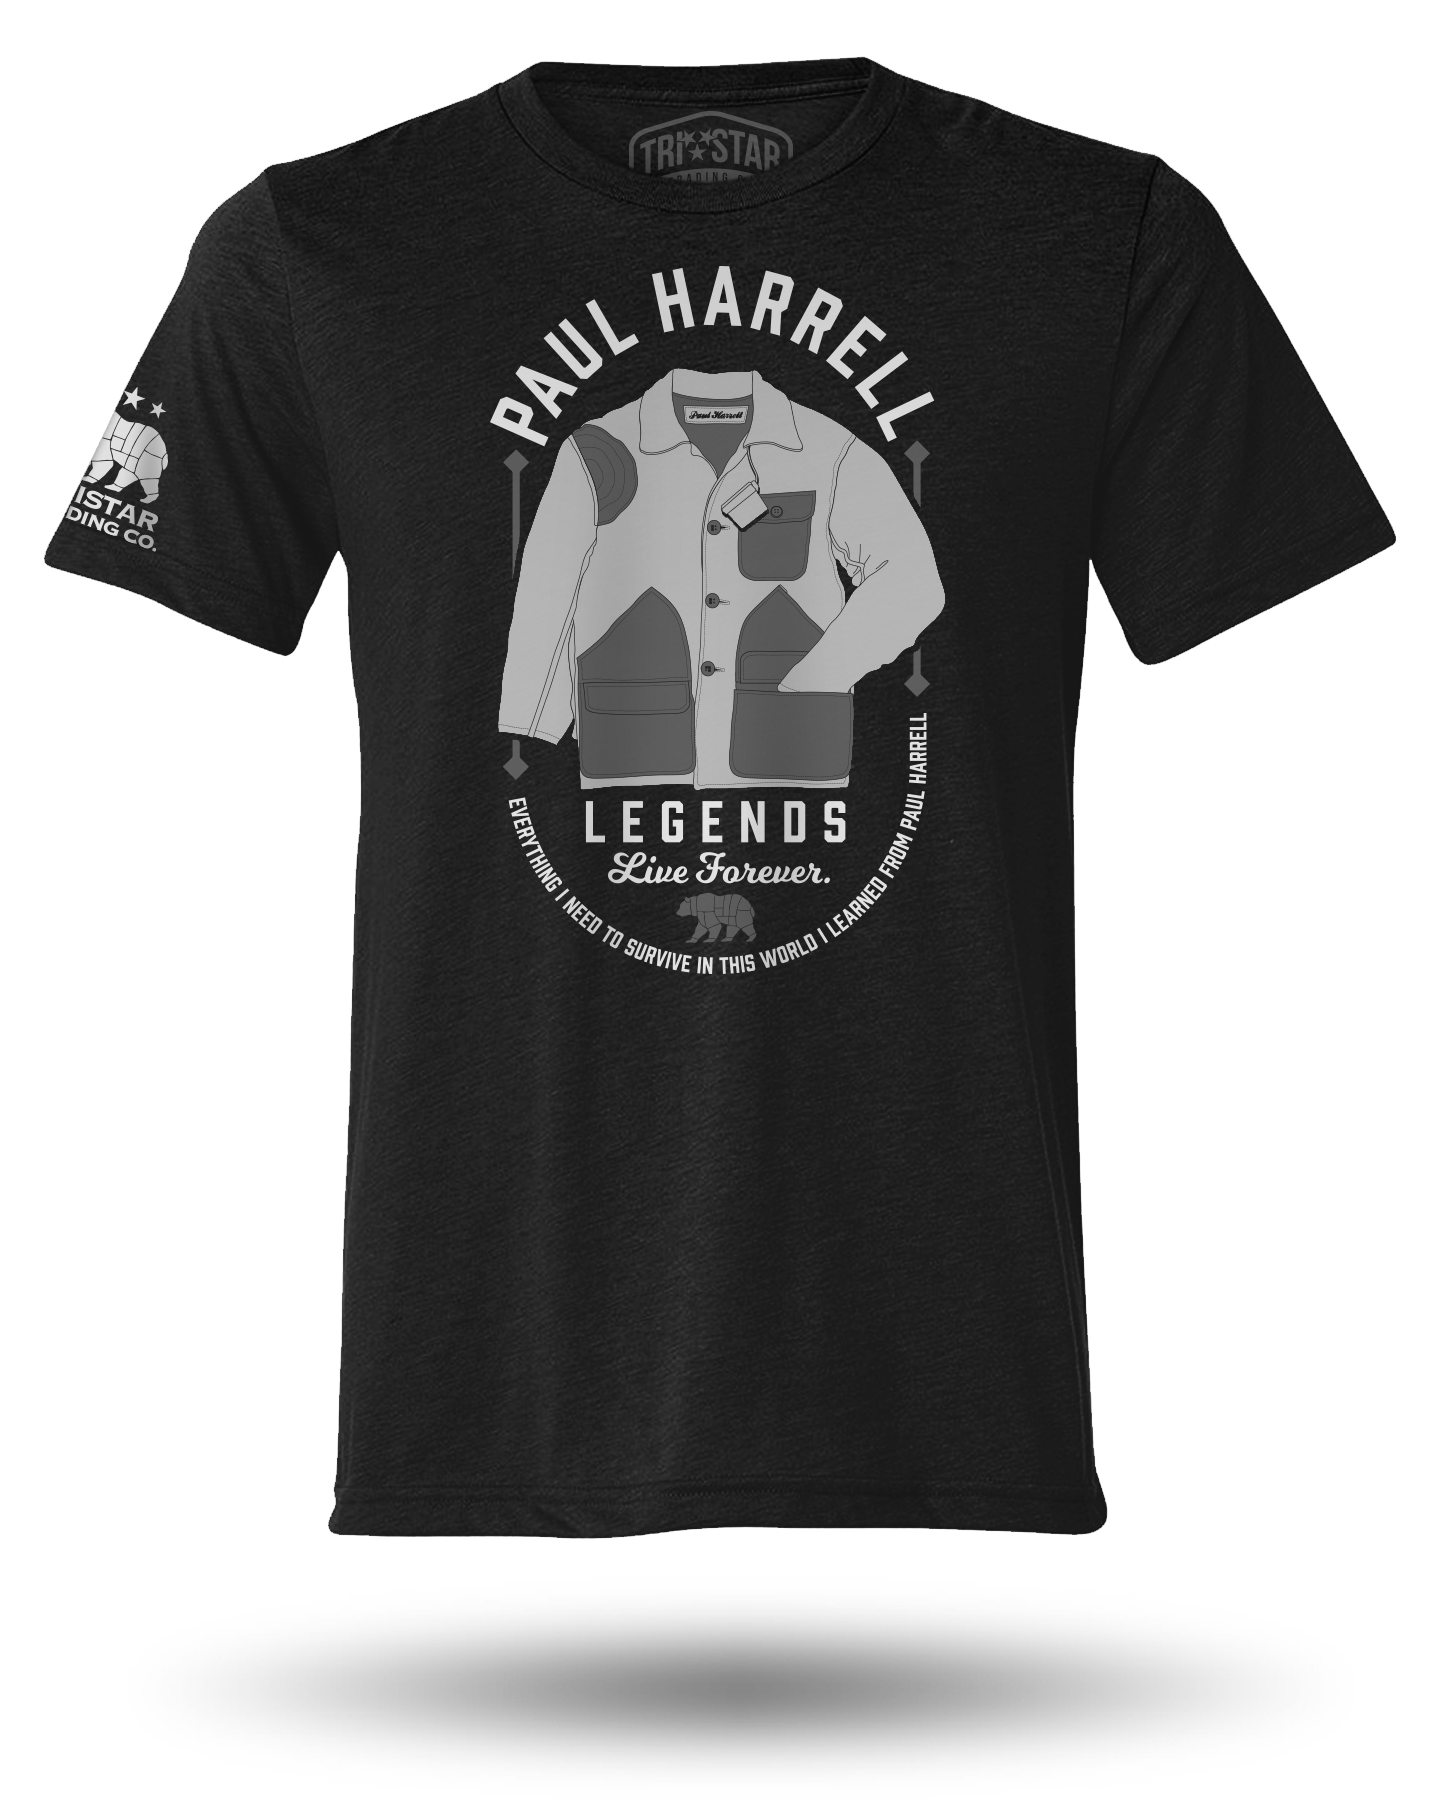 Paul Harrell Legends Live Forever